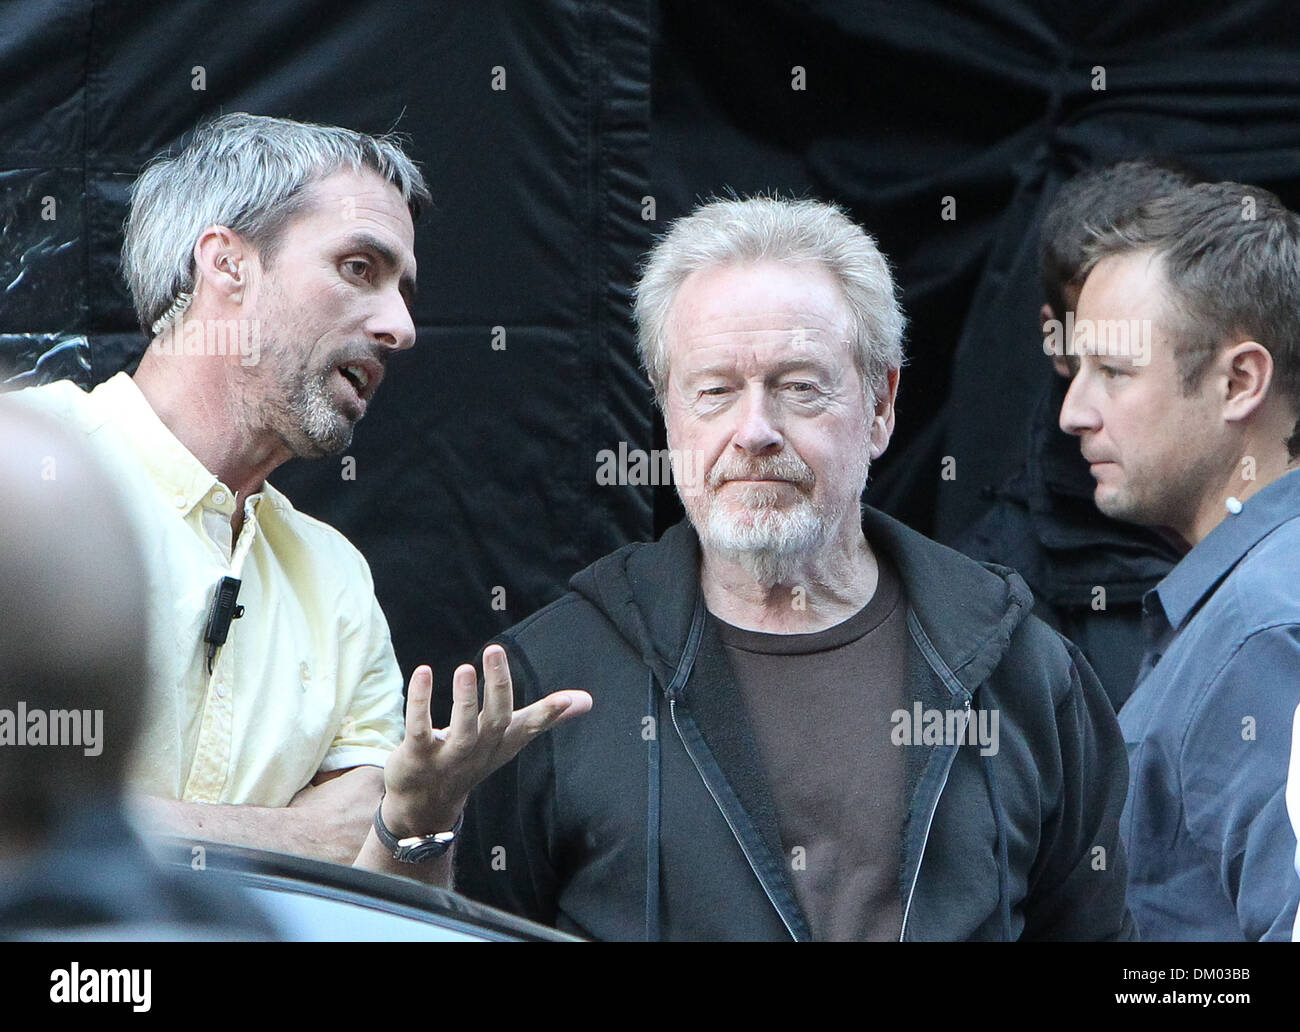 Regisseur Ridley Scott am Set des neuen Films "The Counselor". London, England - 08.09.12 Stockfoto